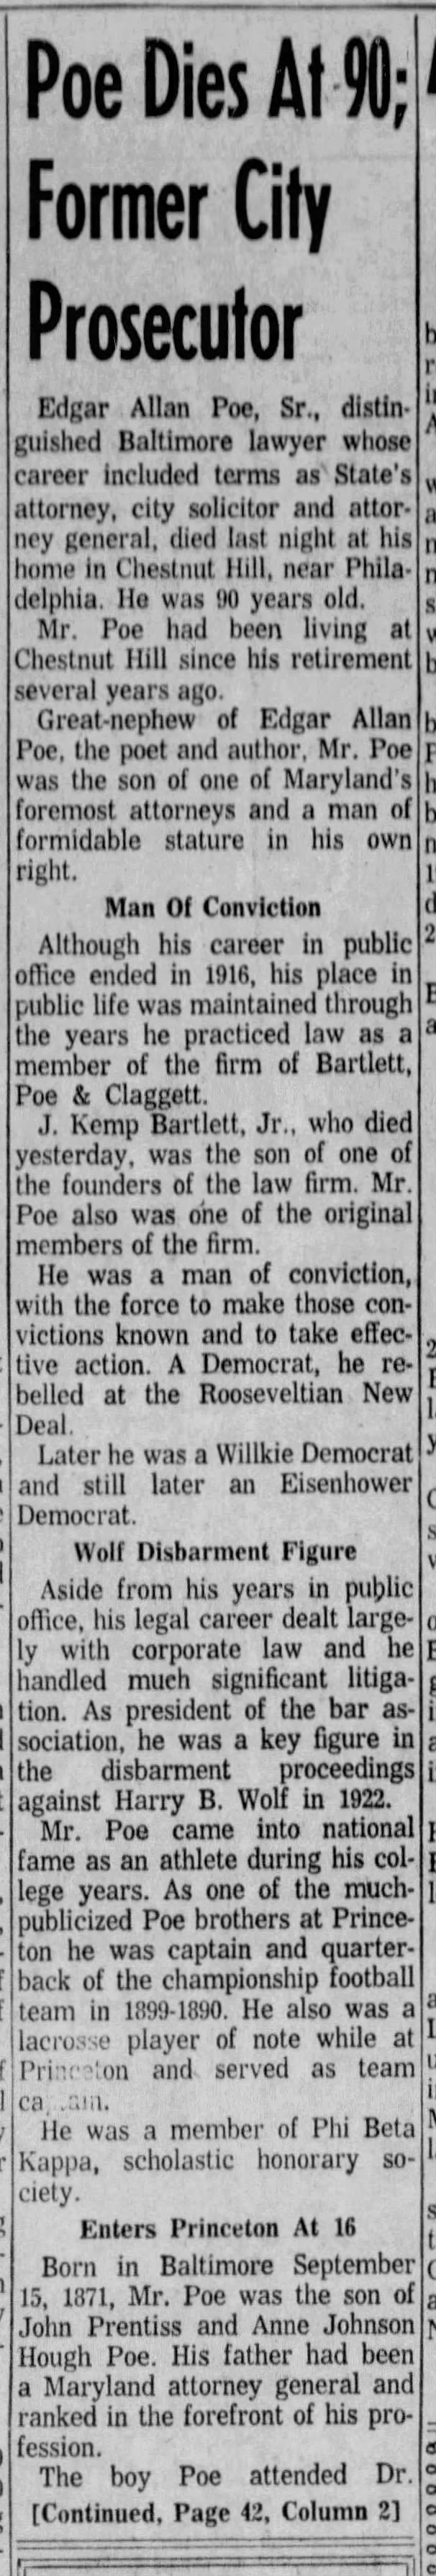 Poe Dies At 90; Former City Prosecutor; 30 Nov 1961; The Evening Sun; 56